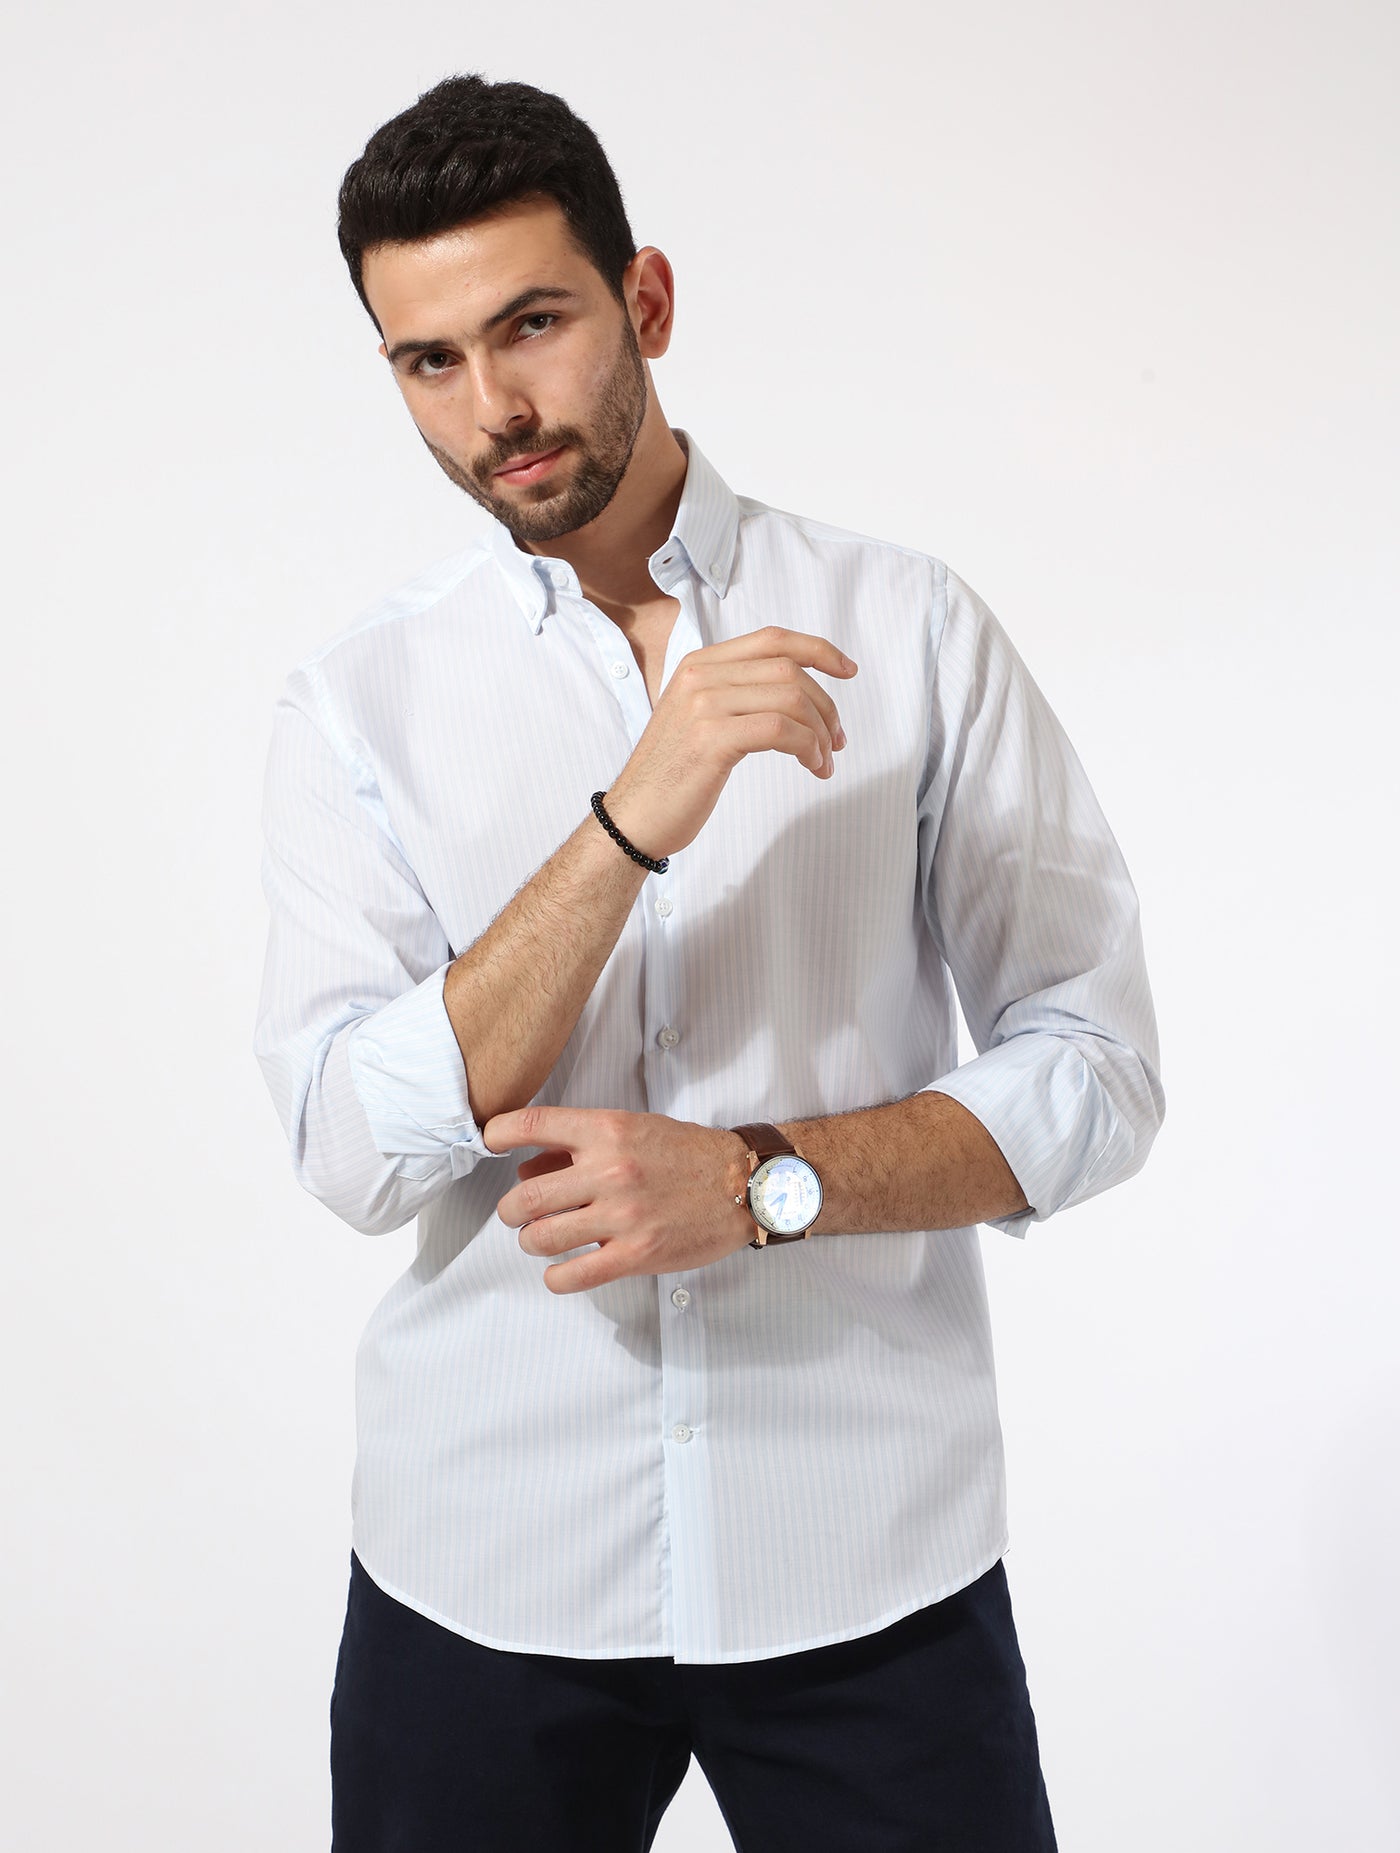 Shirt - Long Sleeves - Striped